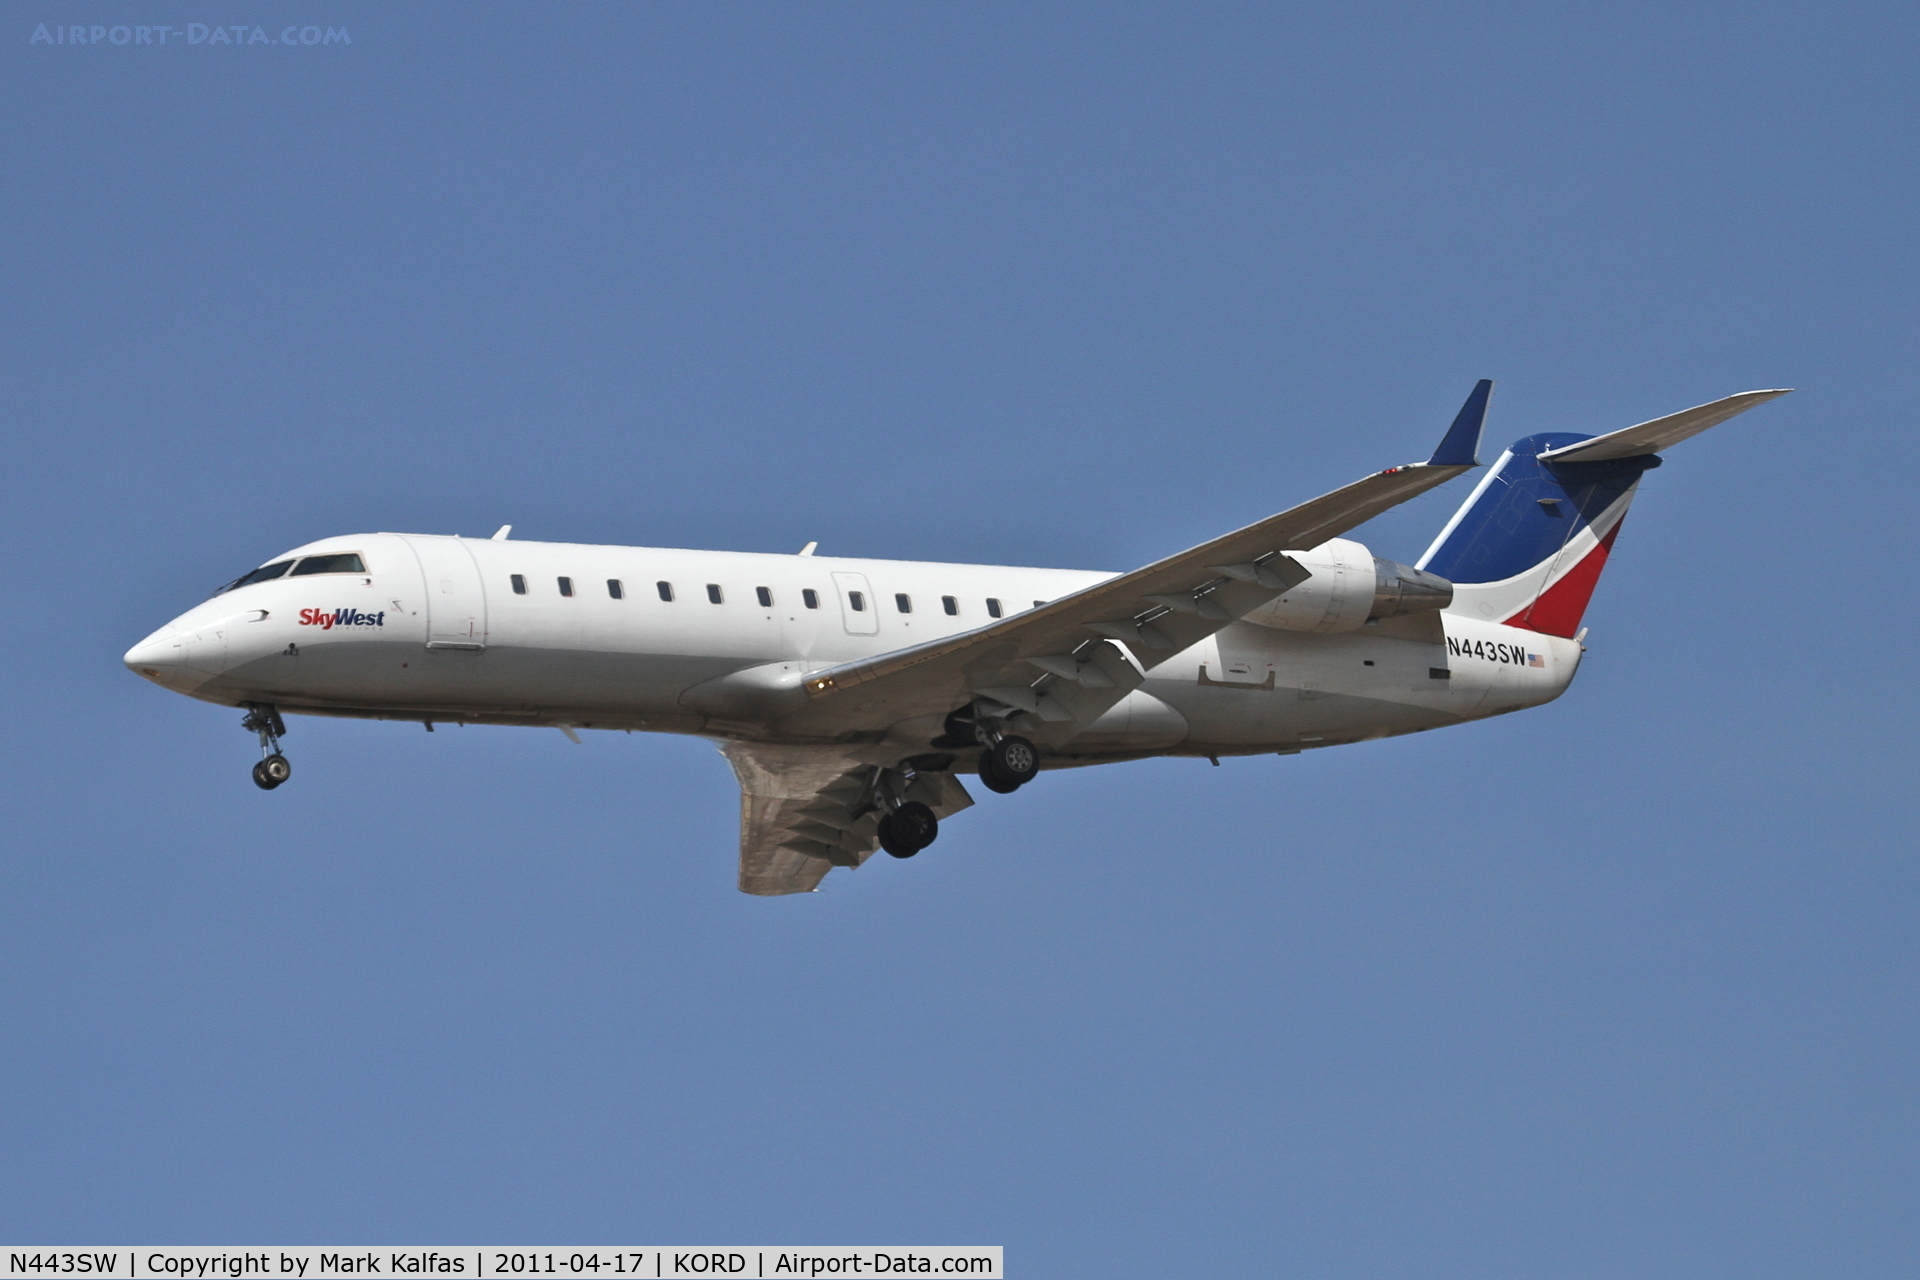 N443SW, 2002 Bombardier CRJ-200LR (CL-600-2B19) C/N 7638, SkyWest Bombardier CL-600-2B19, SKW7030 arriving from KMLI, RWY 28 approach KORD.